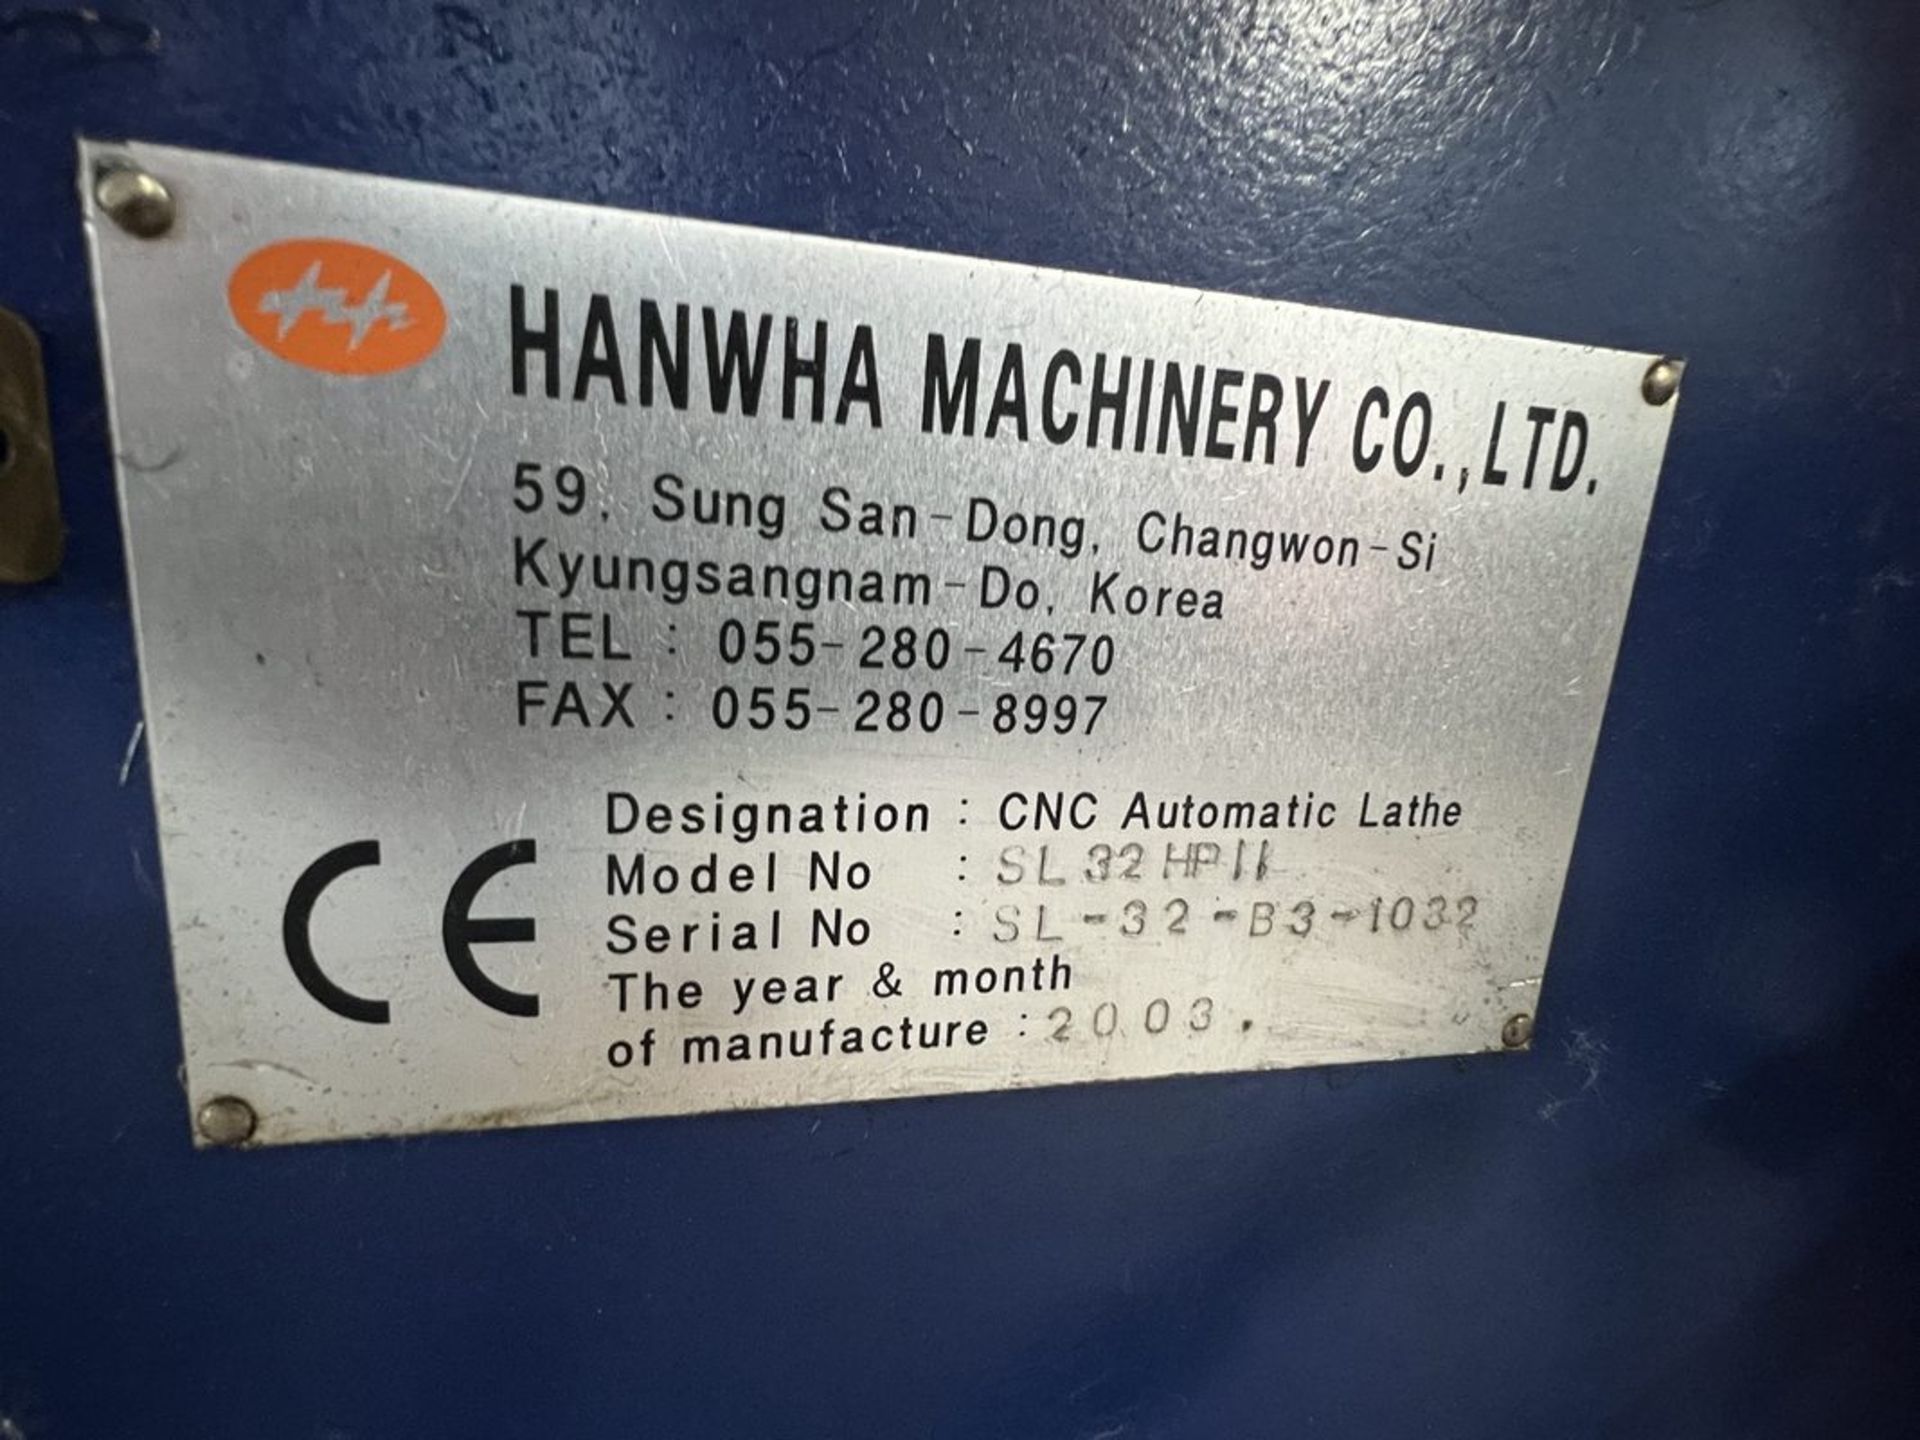 Hanwha SL32HPII 32 mm (1-1/4") 7-Axis CNC Swiss Lathe, S/N SL-32-B3-1022, 2003 - Image 10 of 17